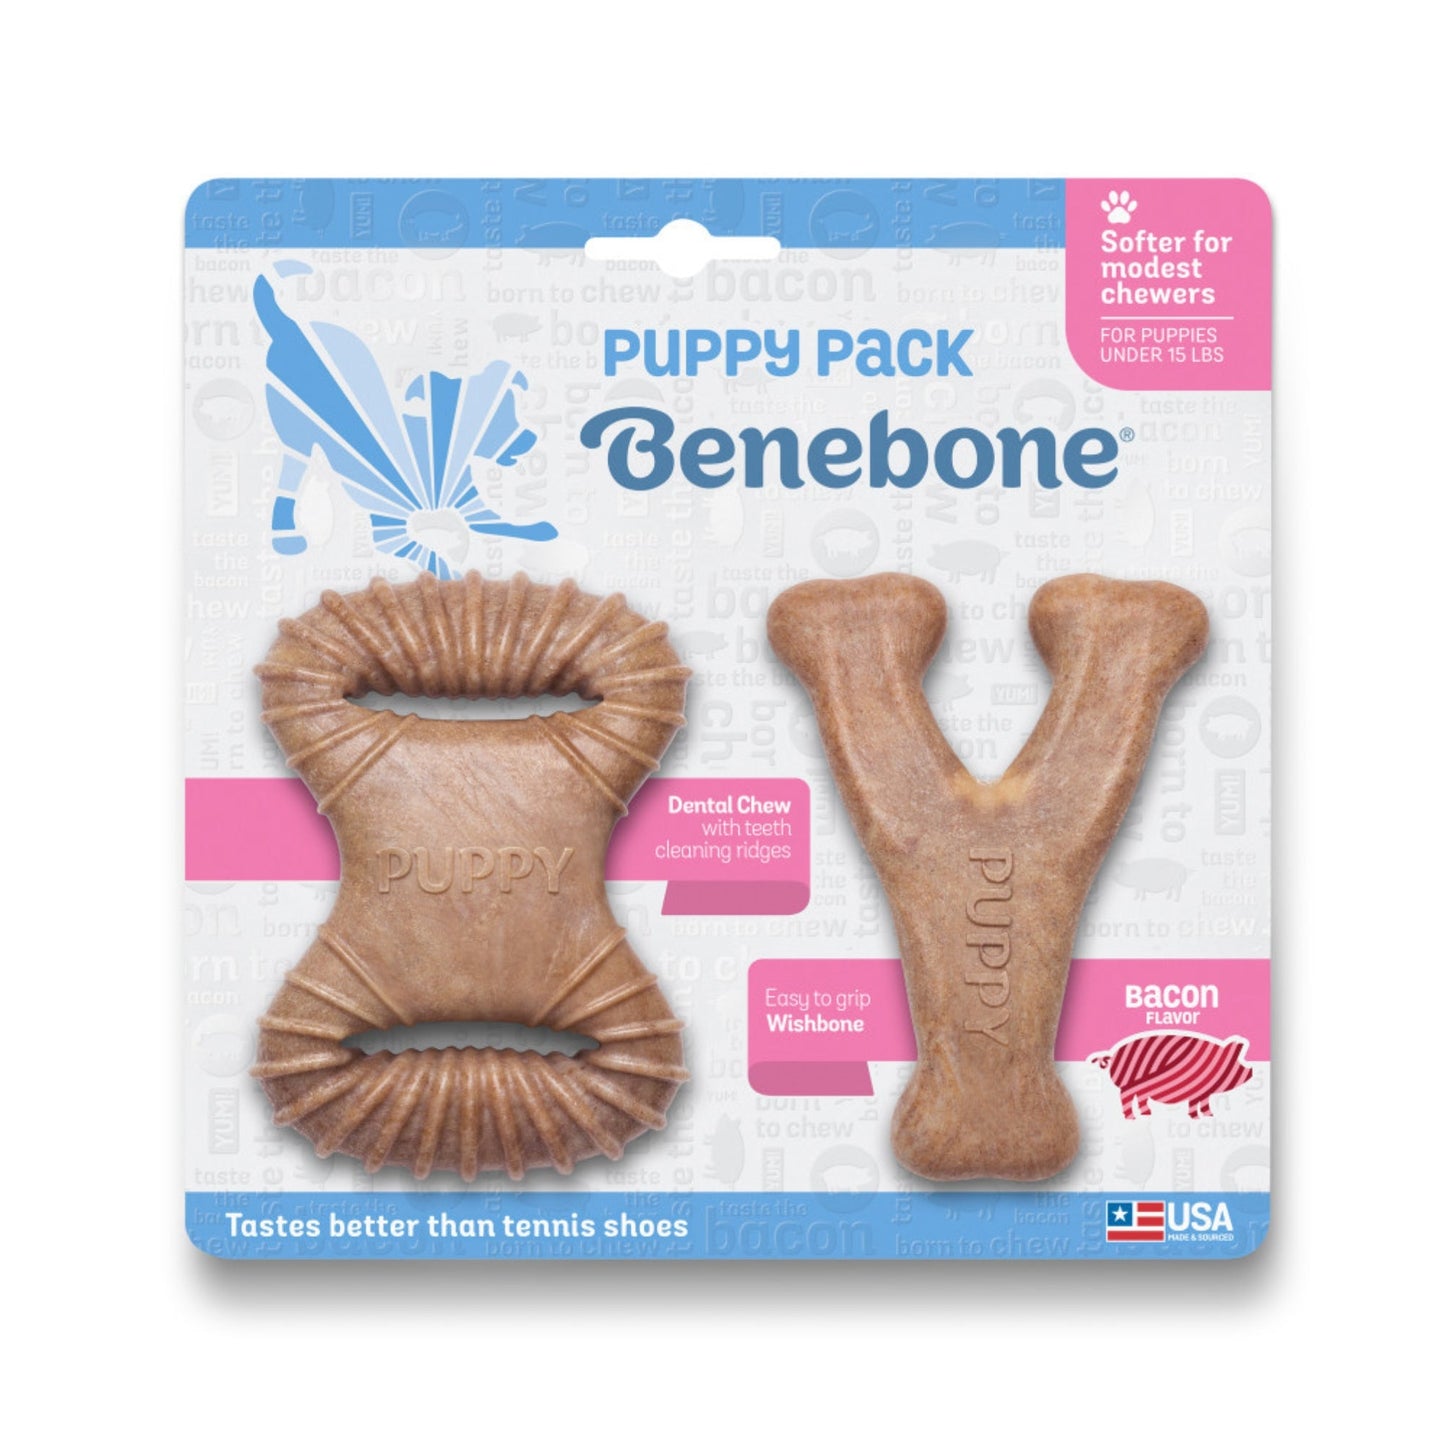 Benebone Puppy Pack Dental Chew & Wishbone Dog Chew Toys Bacon, 1ea/XS|2 pk